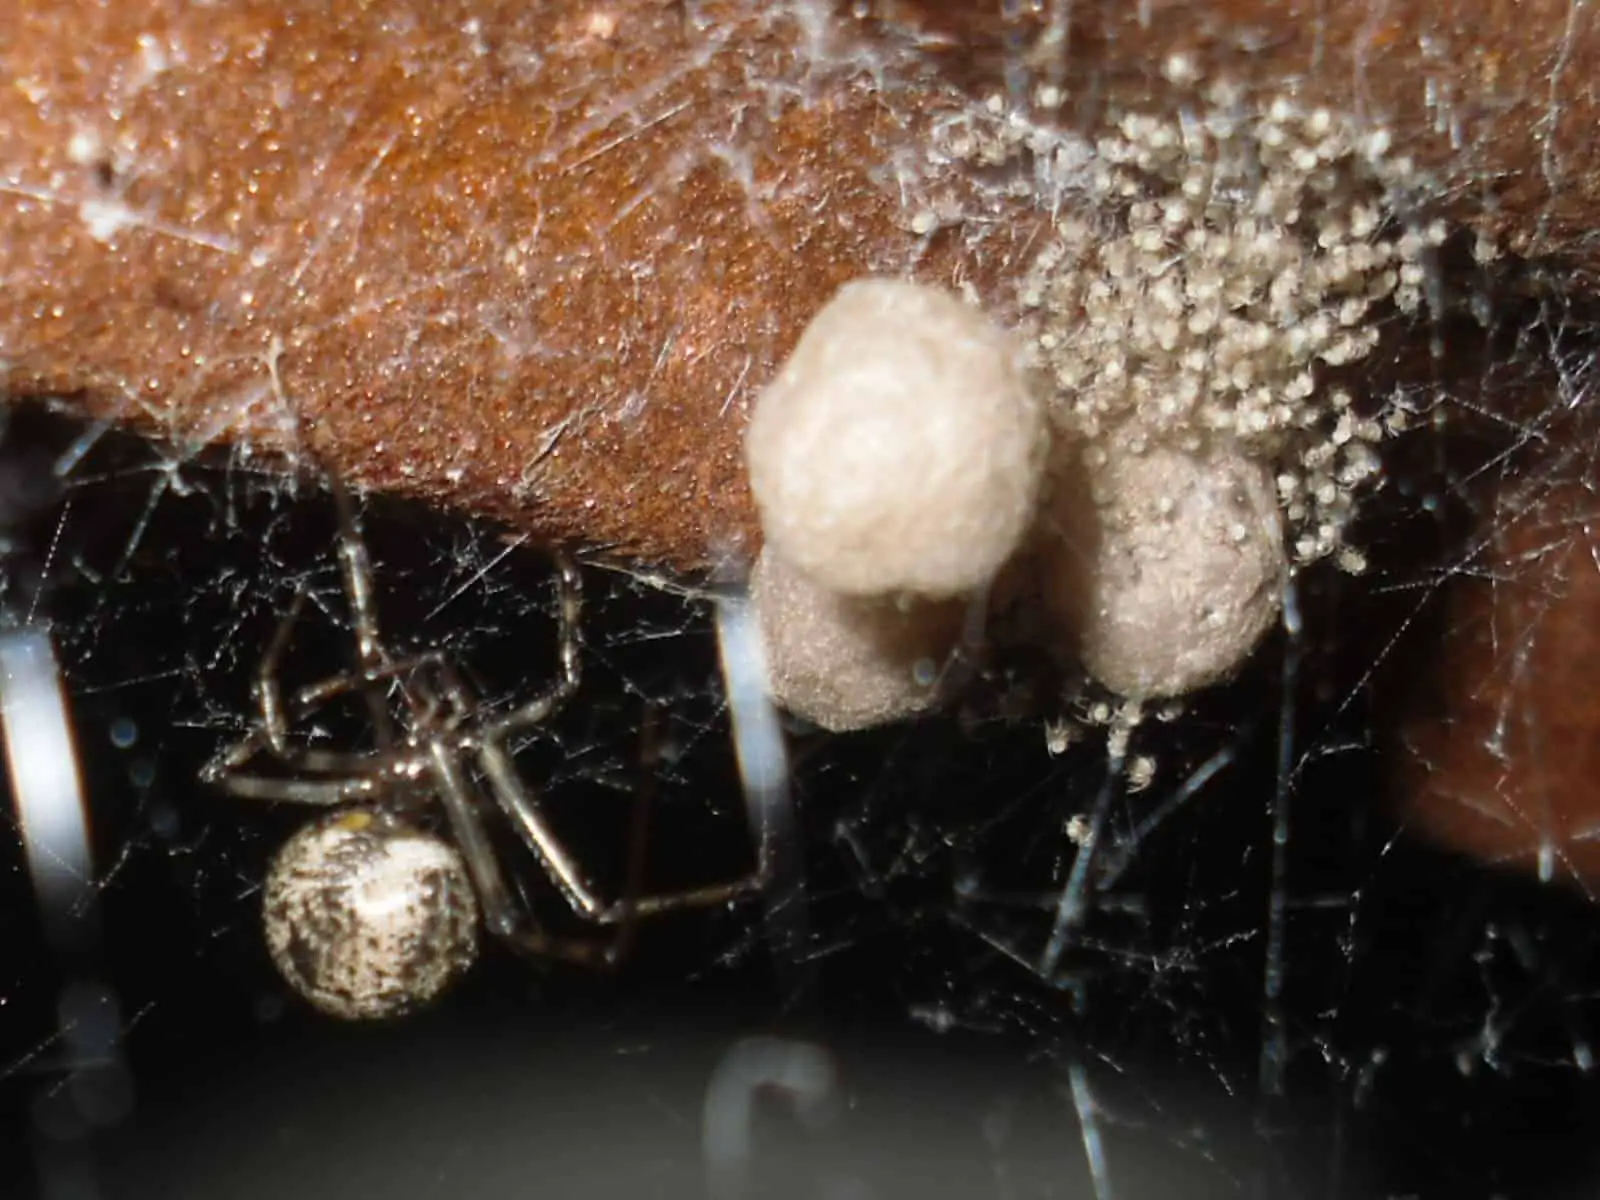 Common House Spider parasteatoda tepidariorum with spiderlings